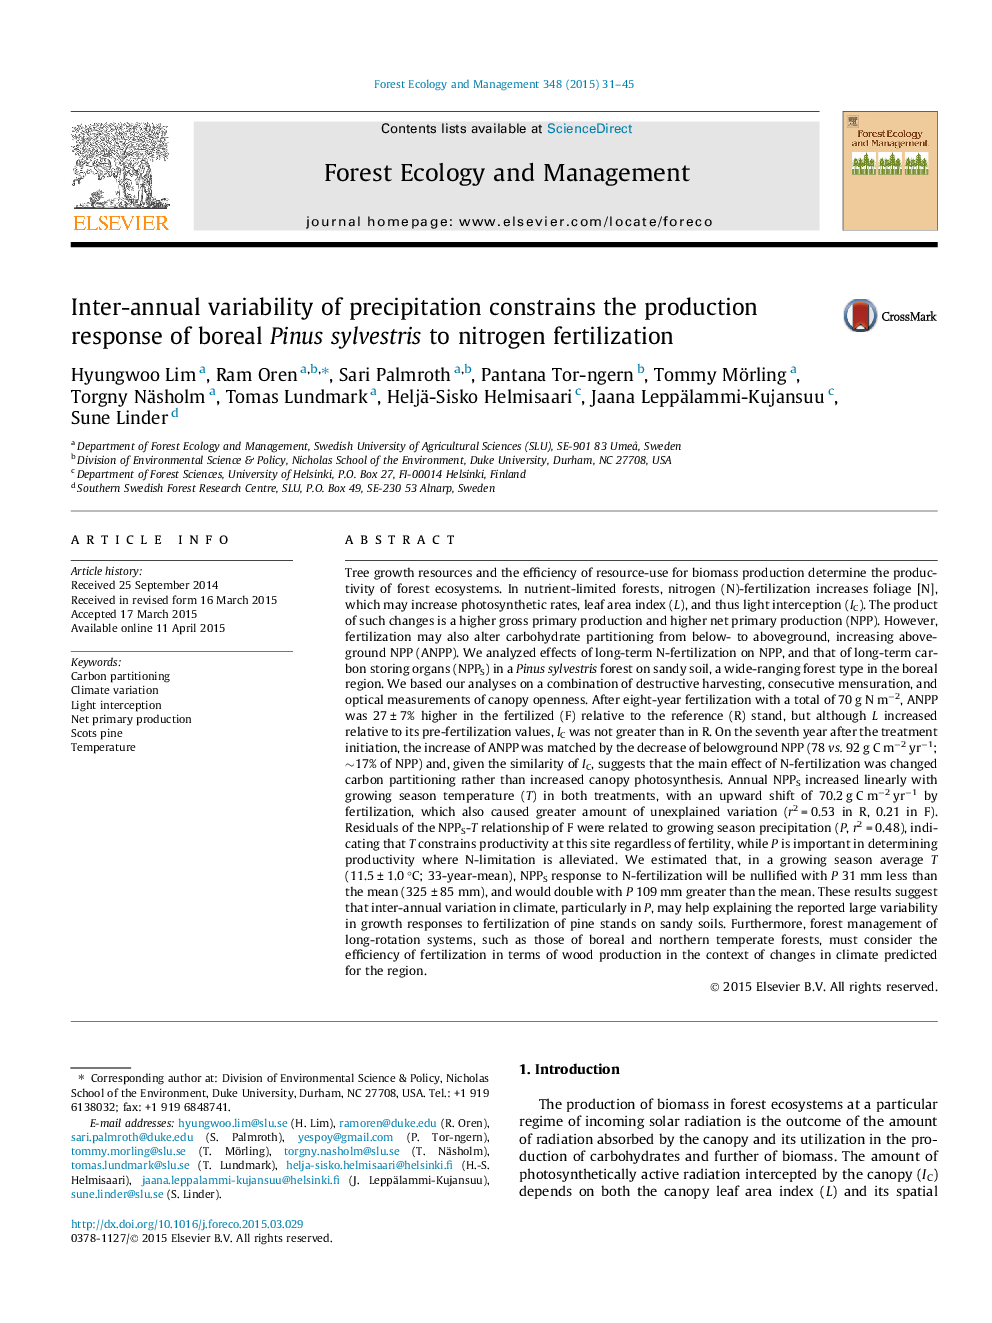 Inter-annual variability of precipitation constrains the production response of boreal Pinus sylvestris to nitrogen fertilization